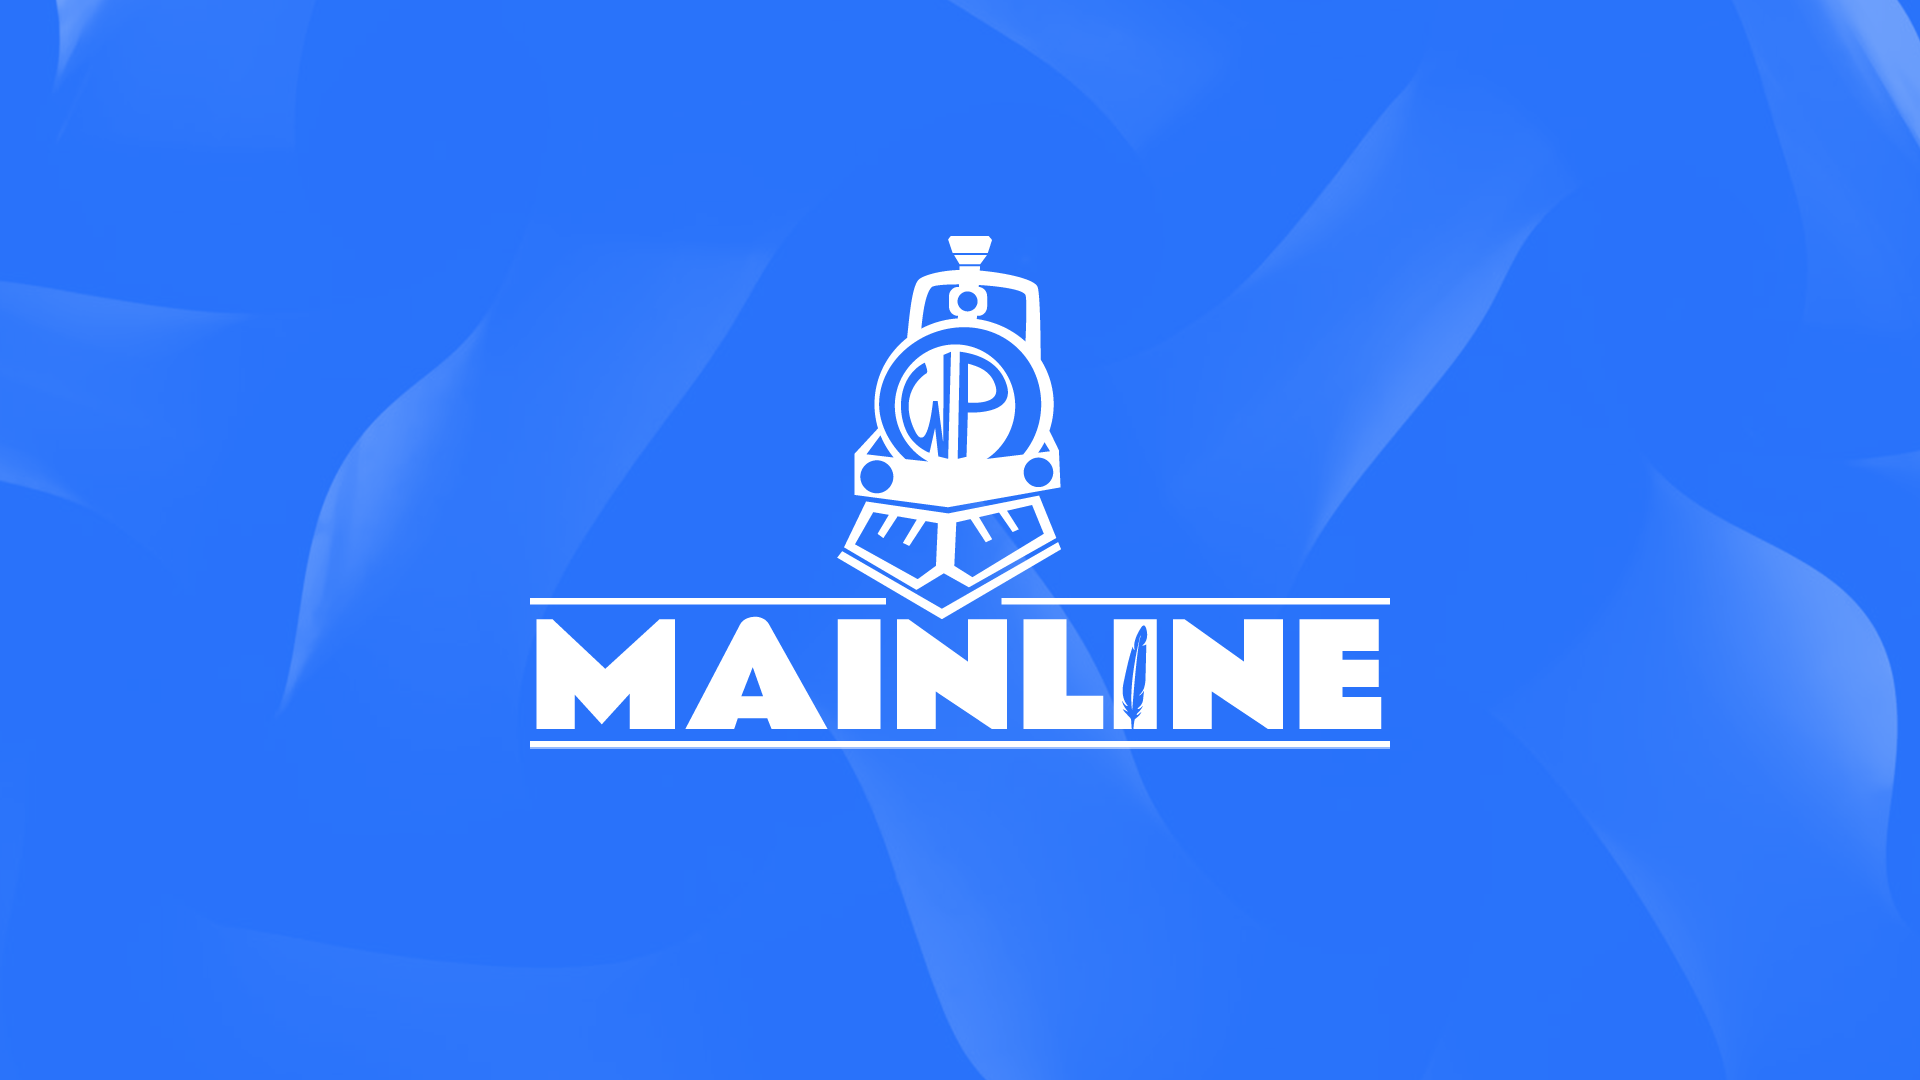 WP Mainline Feature